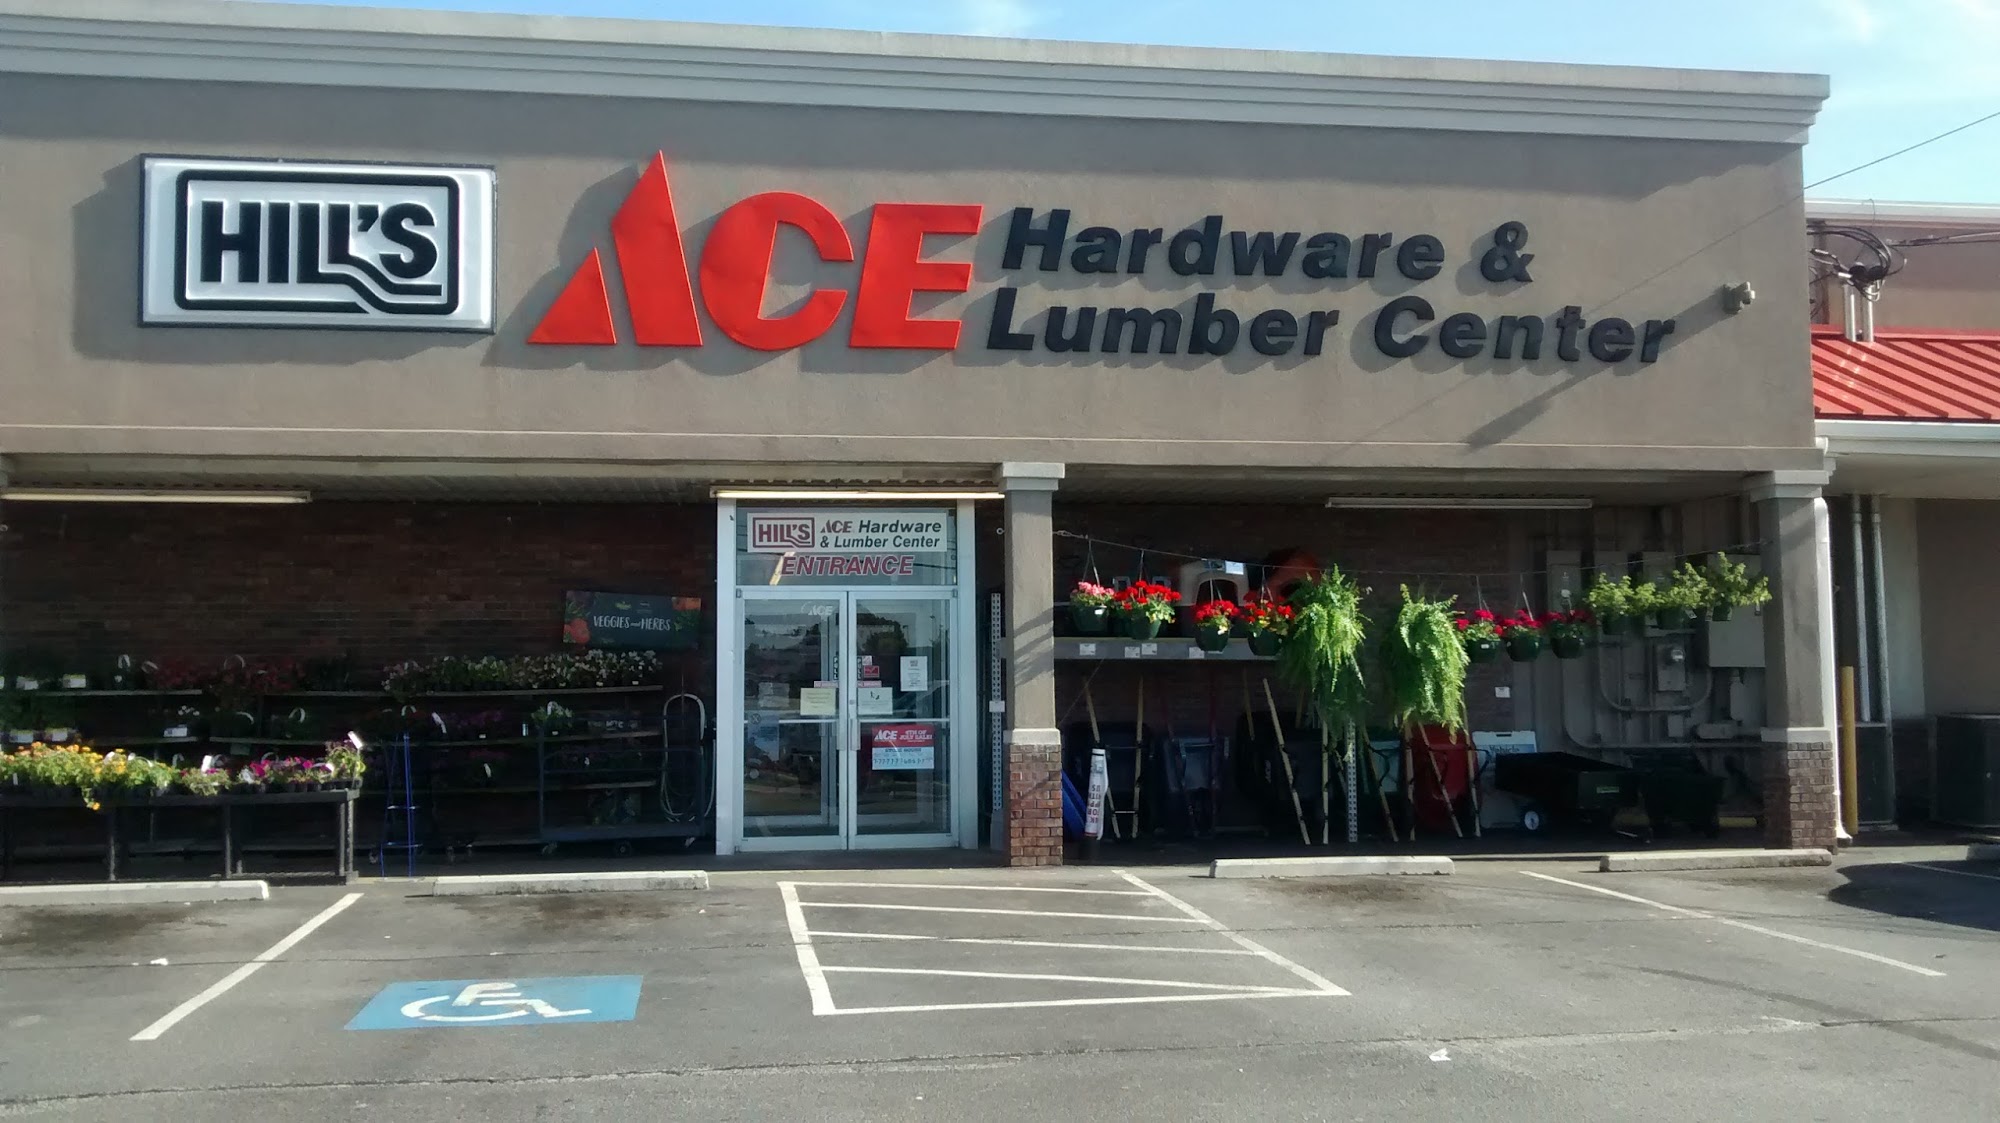 Hill's Ace Hardware & Lumber Center